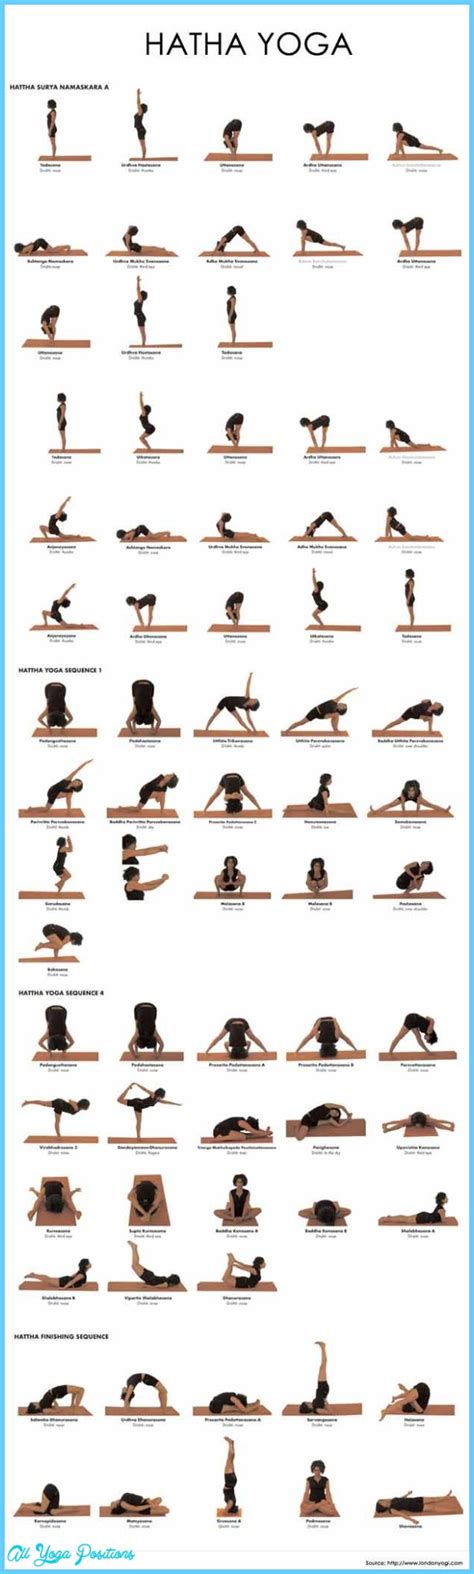 yoga poses allyogapositionscom